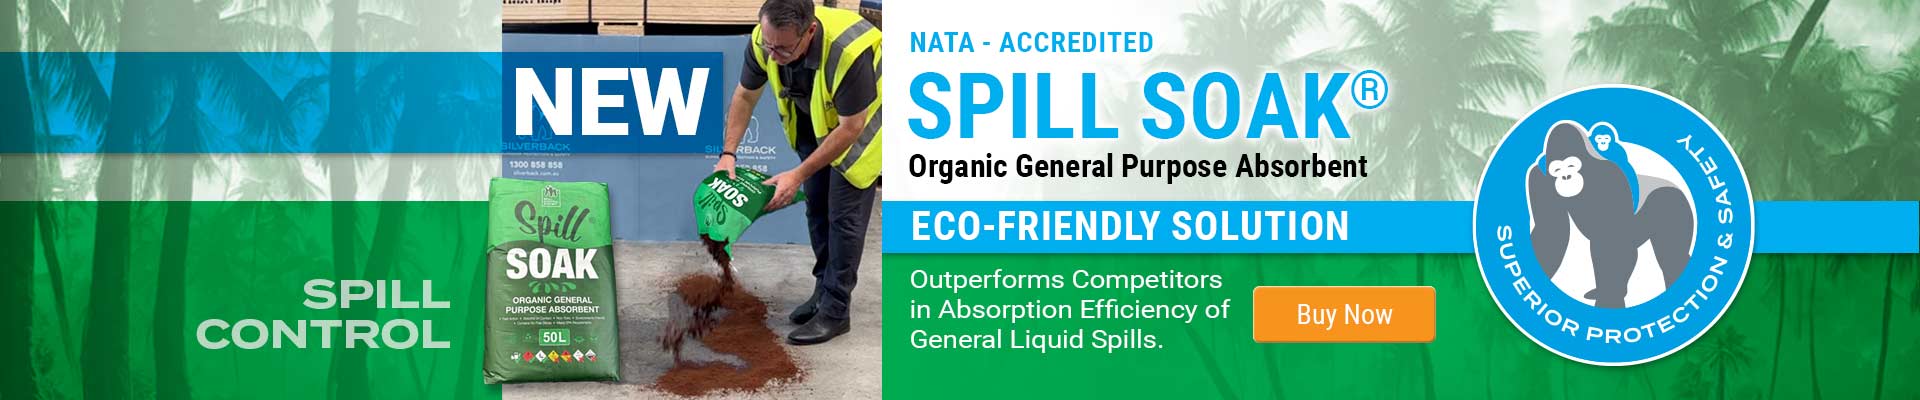 Spill Soak Organic General Purpose Absorbent